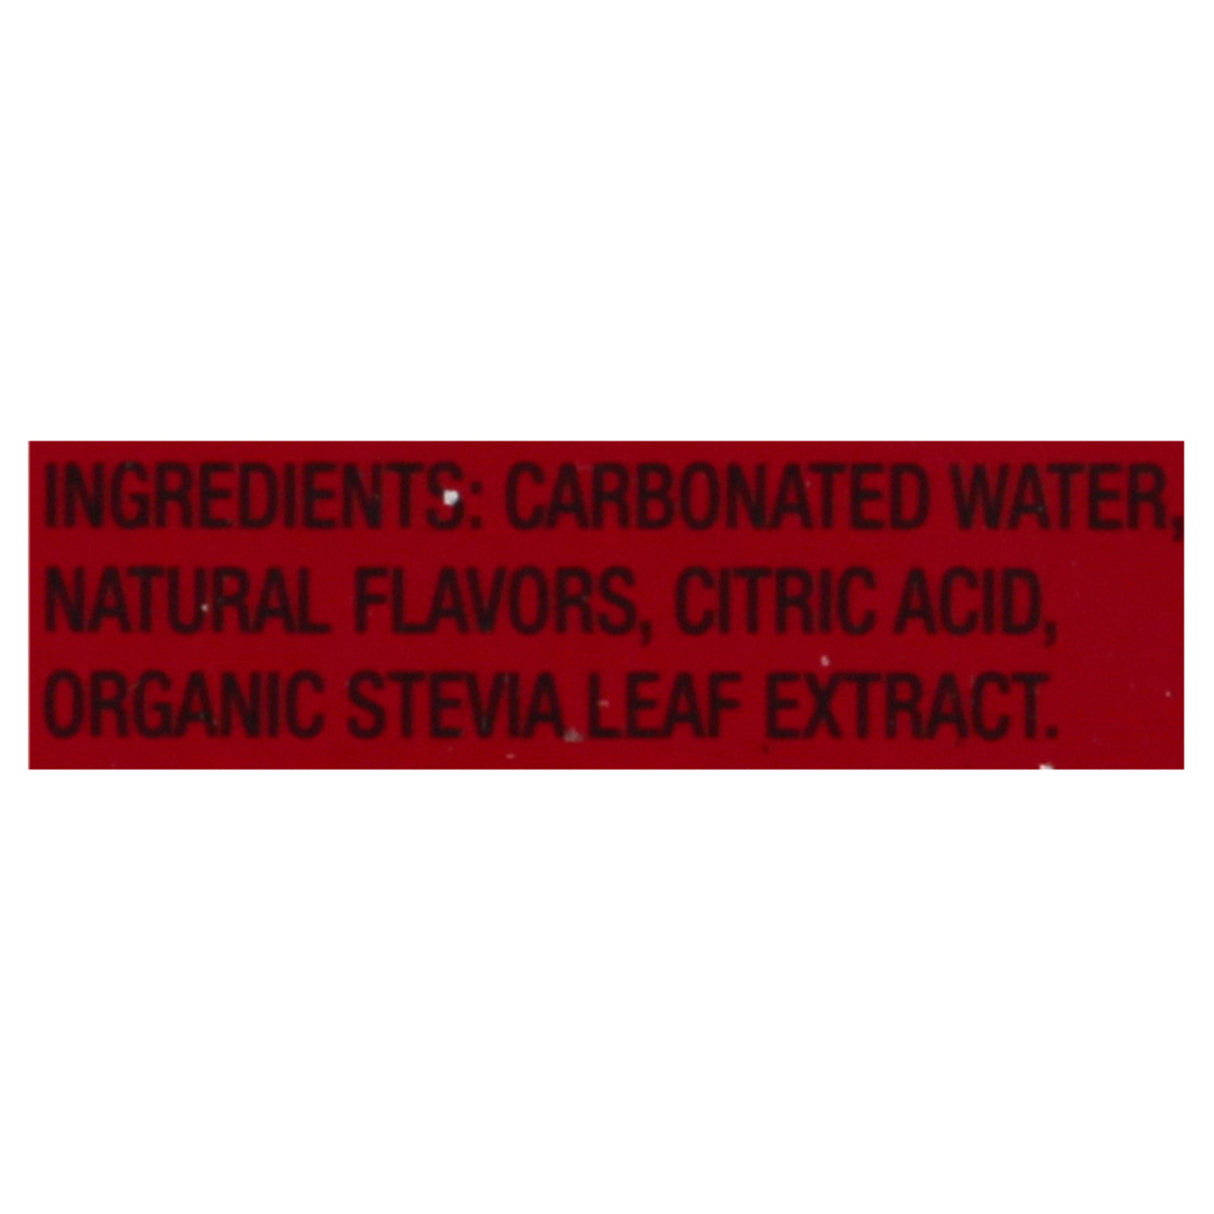 Zevia Kidz Cran-Raspberry Sparkling Water, 6.75 Fl. Oz. Cans (Pack of 4) - Cozy Farm 